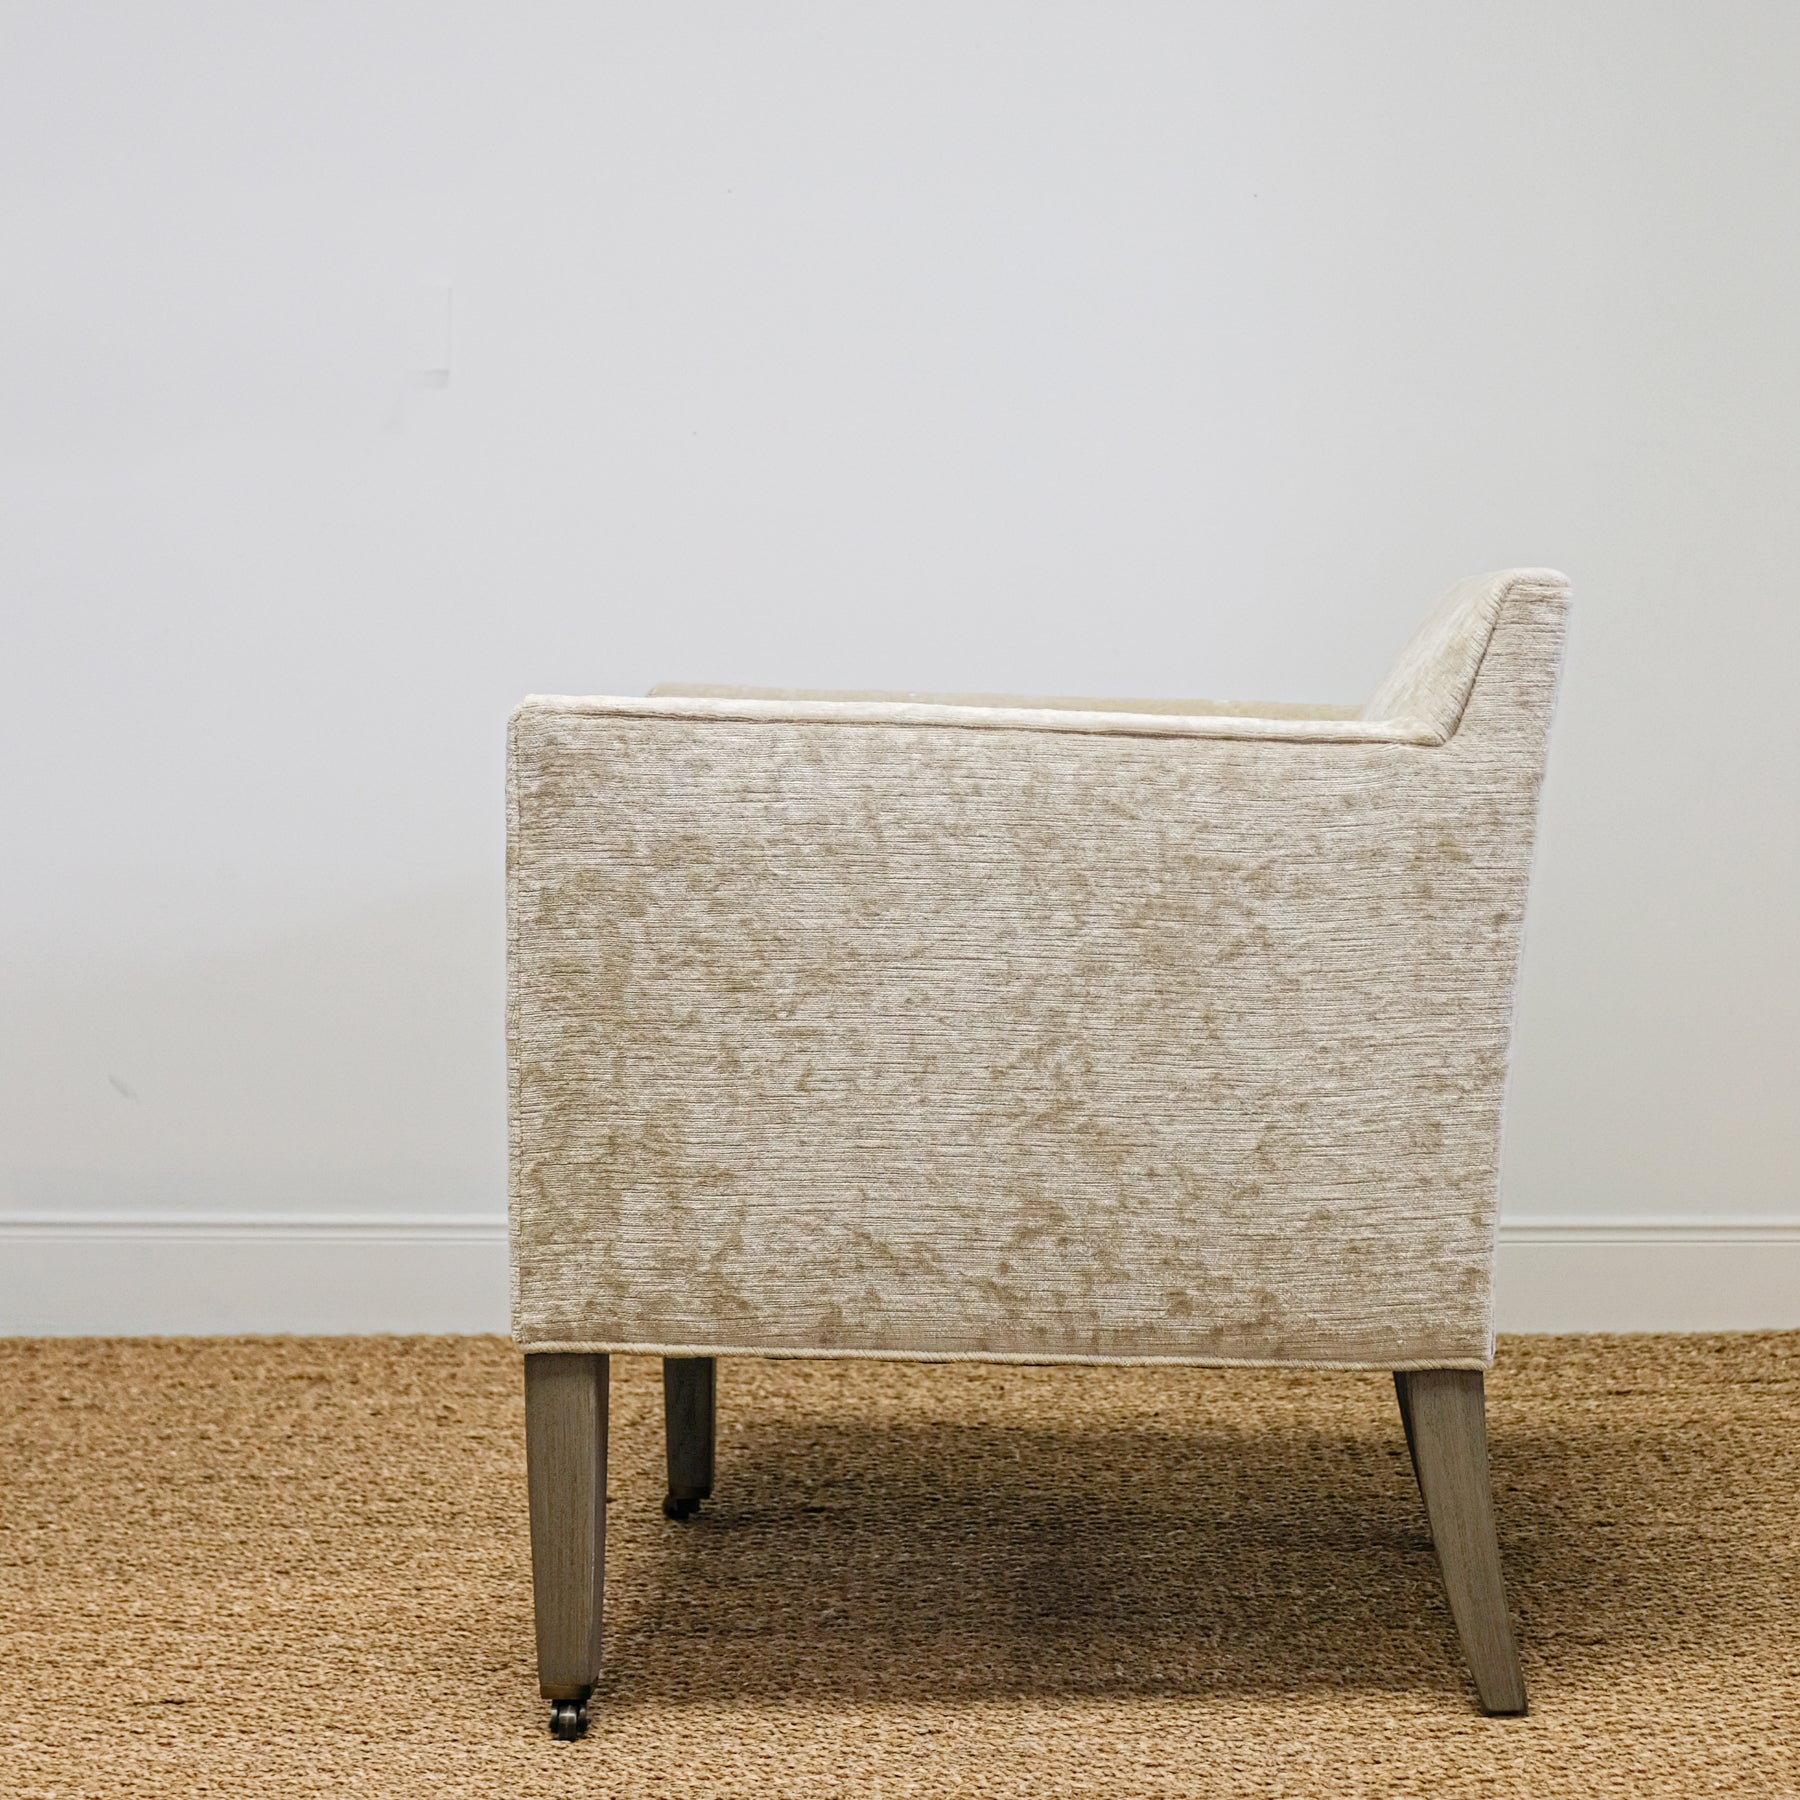 upholstered chair in mottled beige velvet with exposed wood leg, casters on front legs